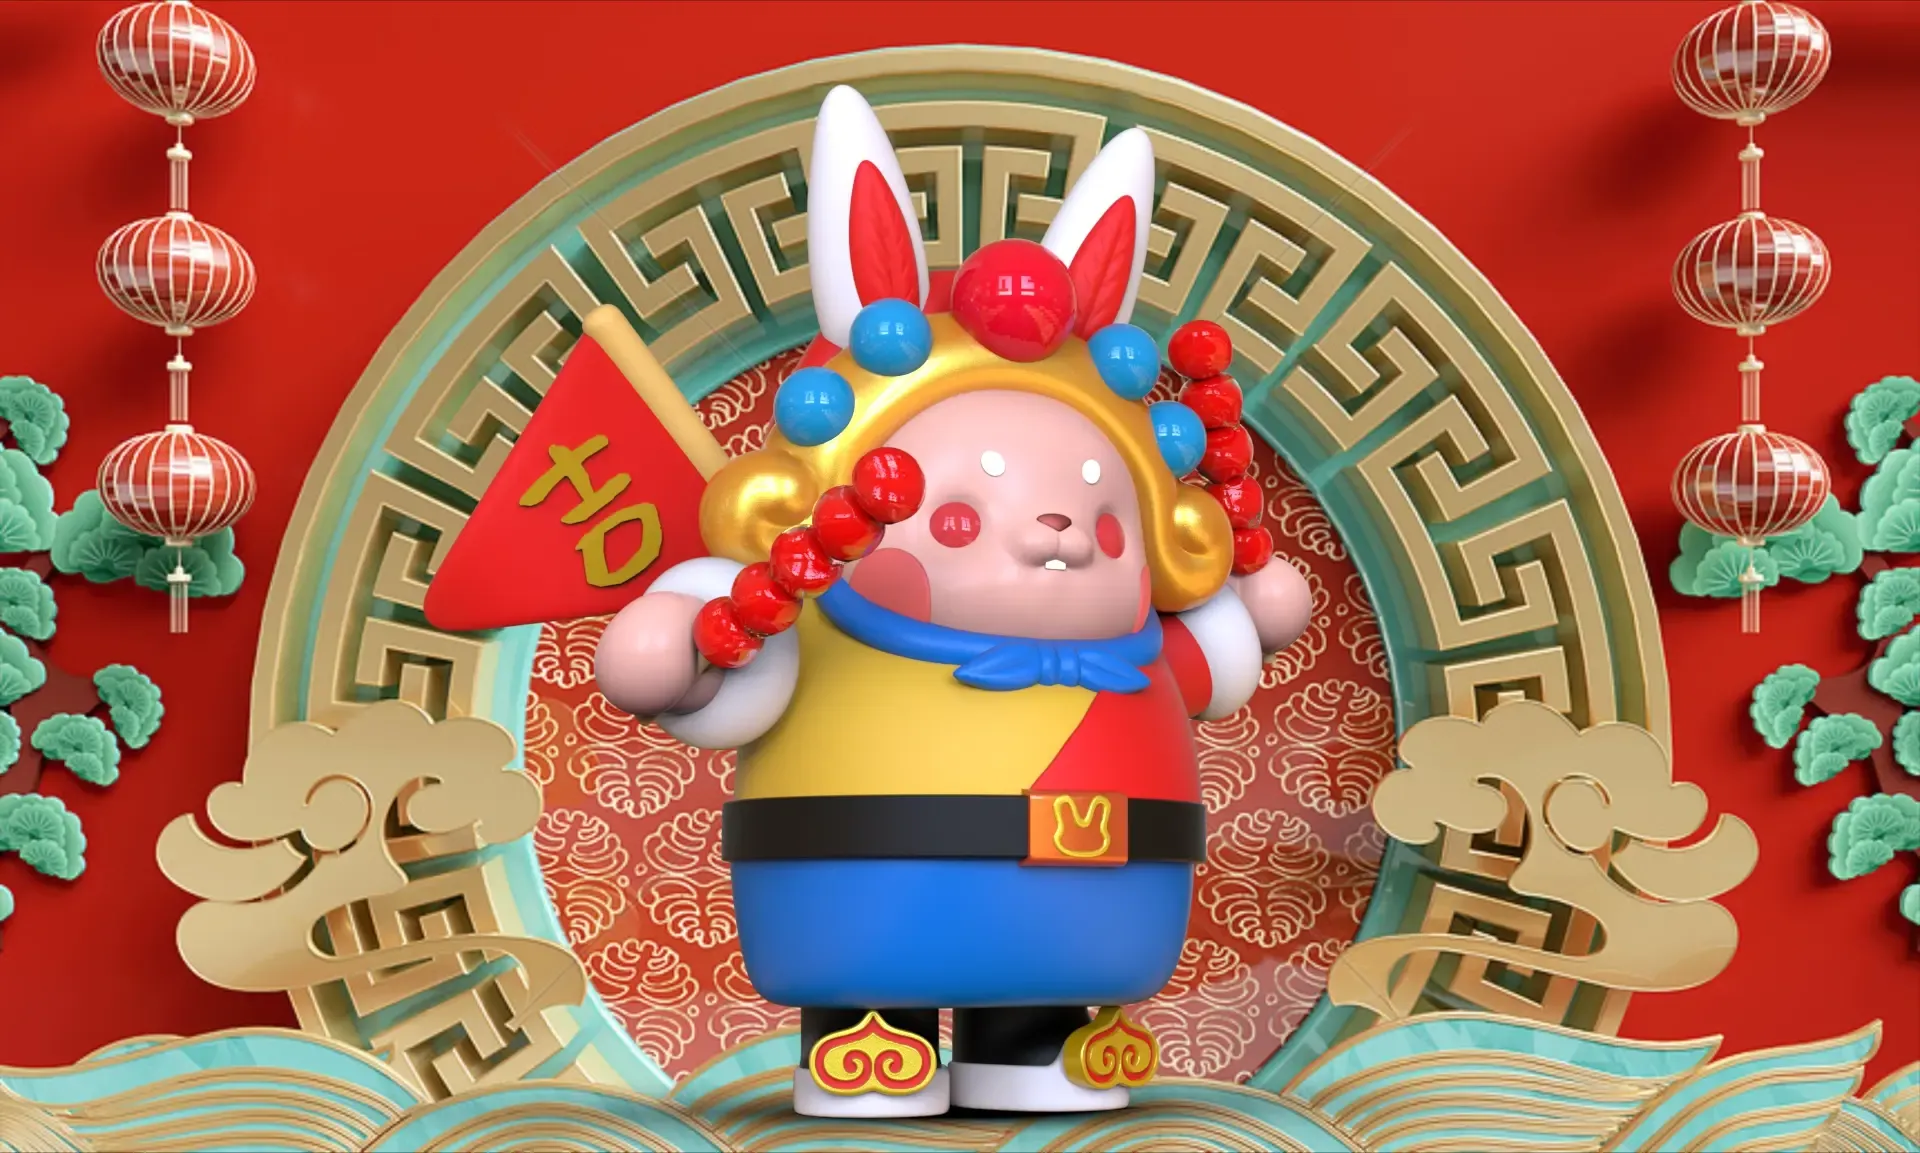 clay rabbit for the Mid-Autumn Festival